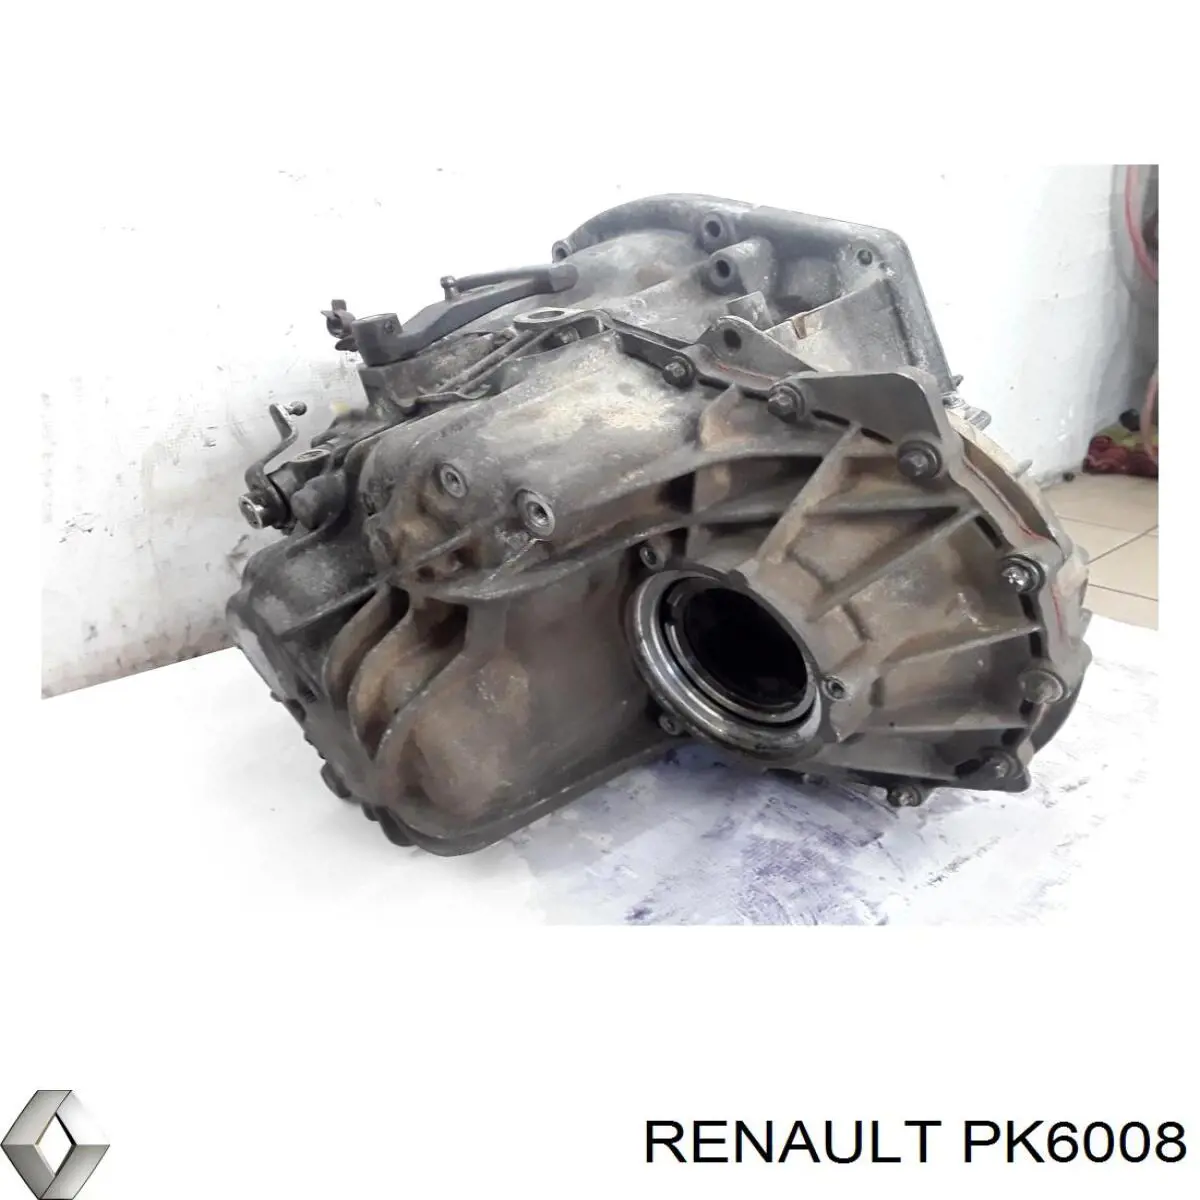 PK6008 Renault (RVI) caja de cambios mecánica, completa